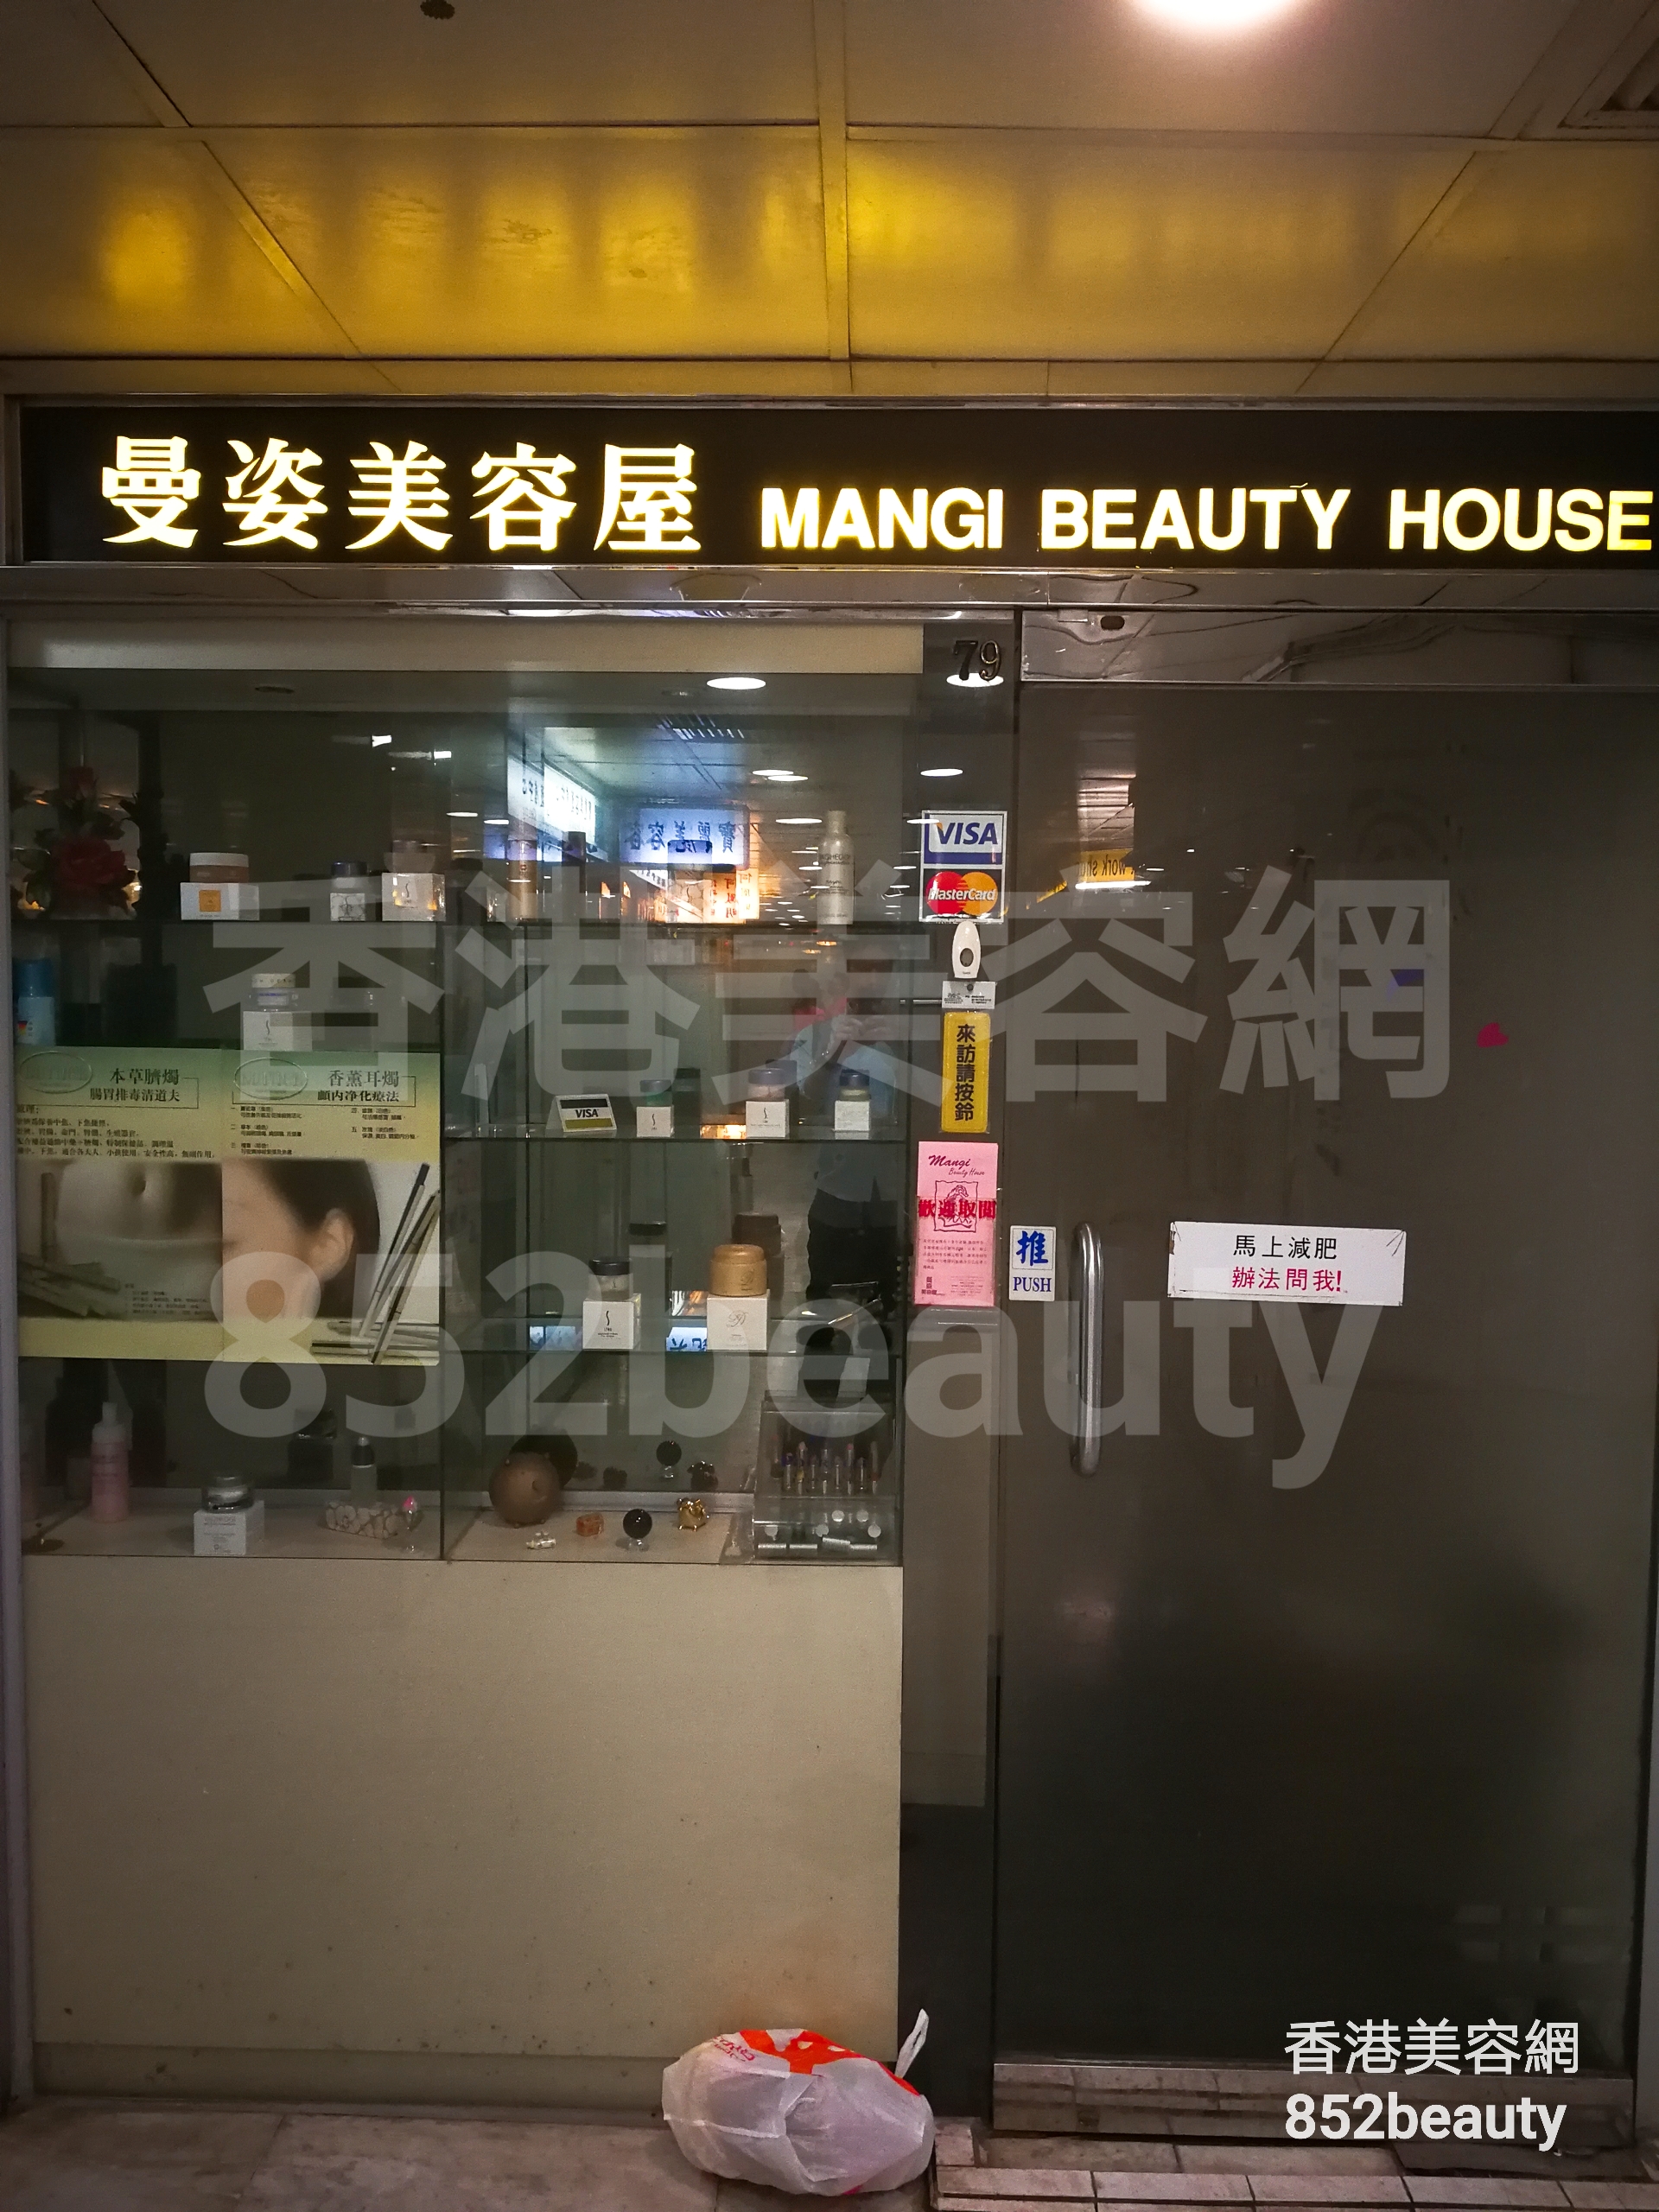 修眉/眼睫毛: Mangi Beauty House